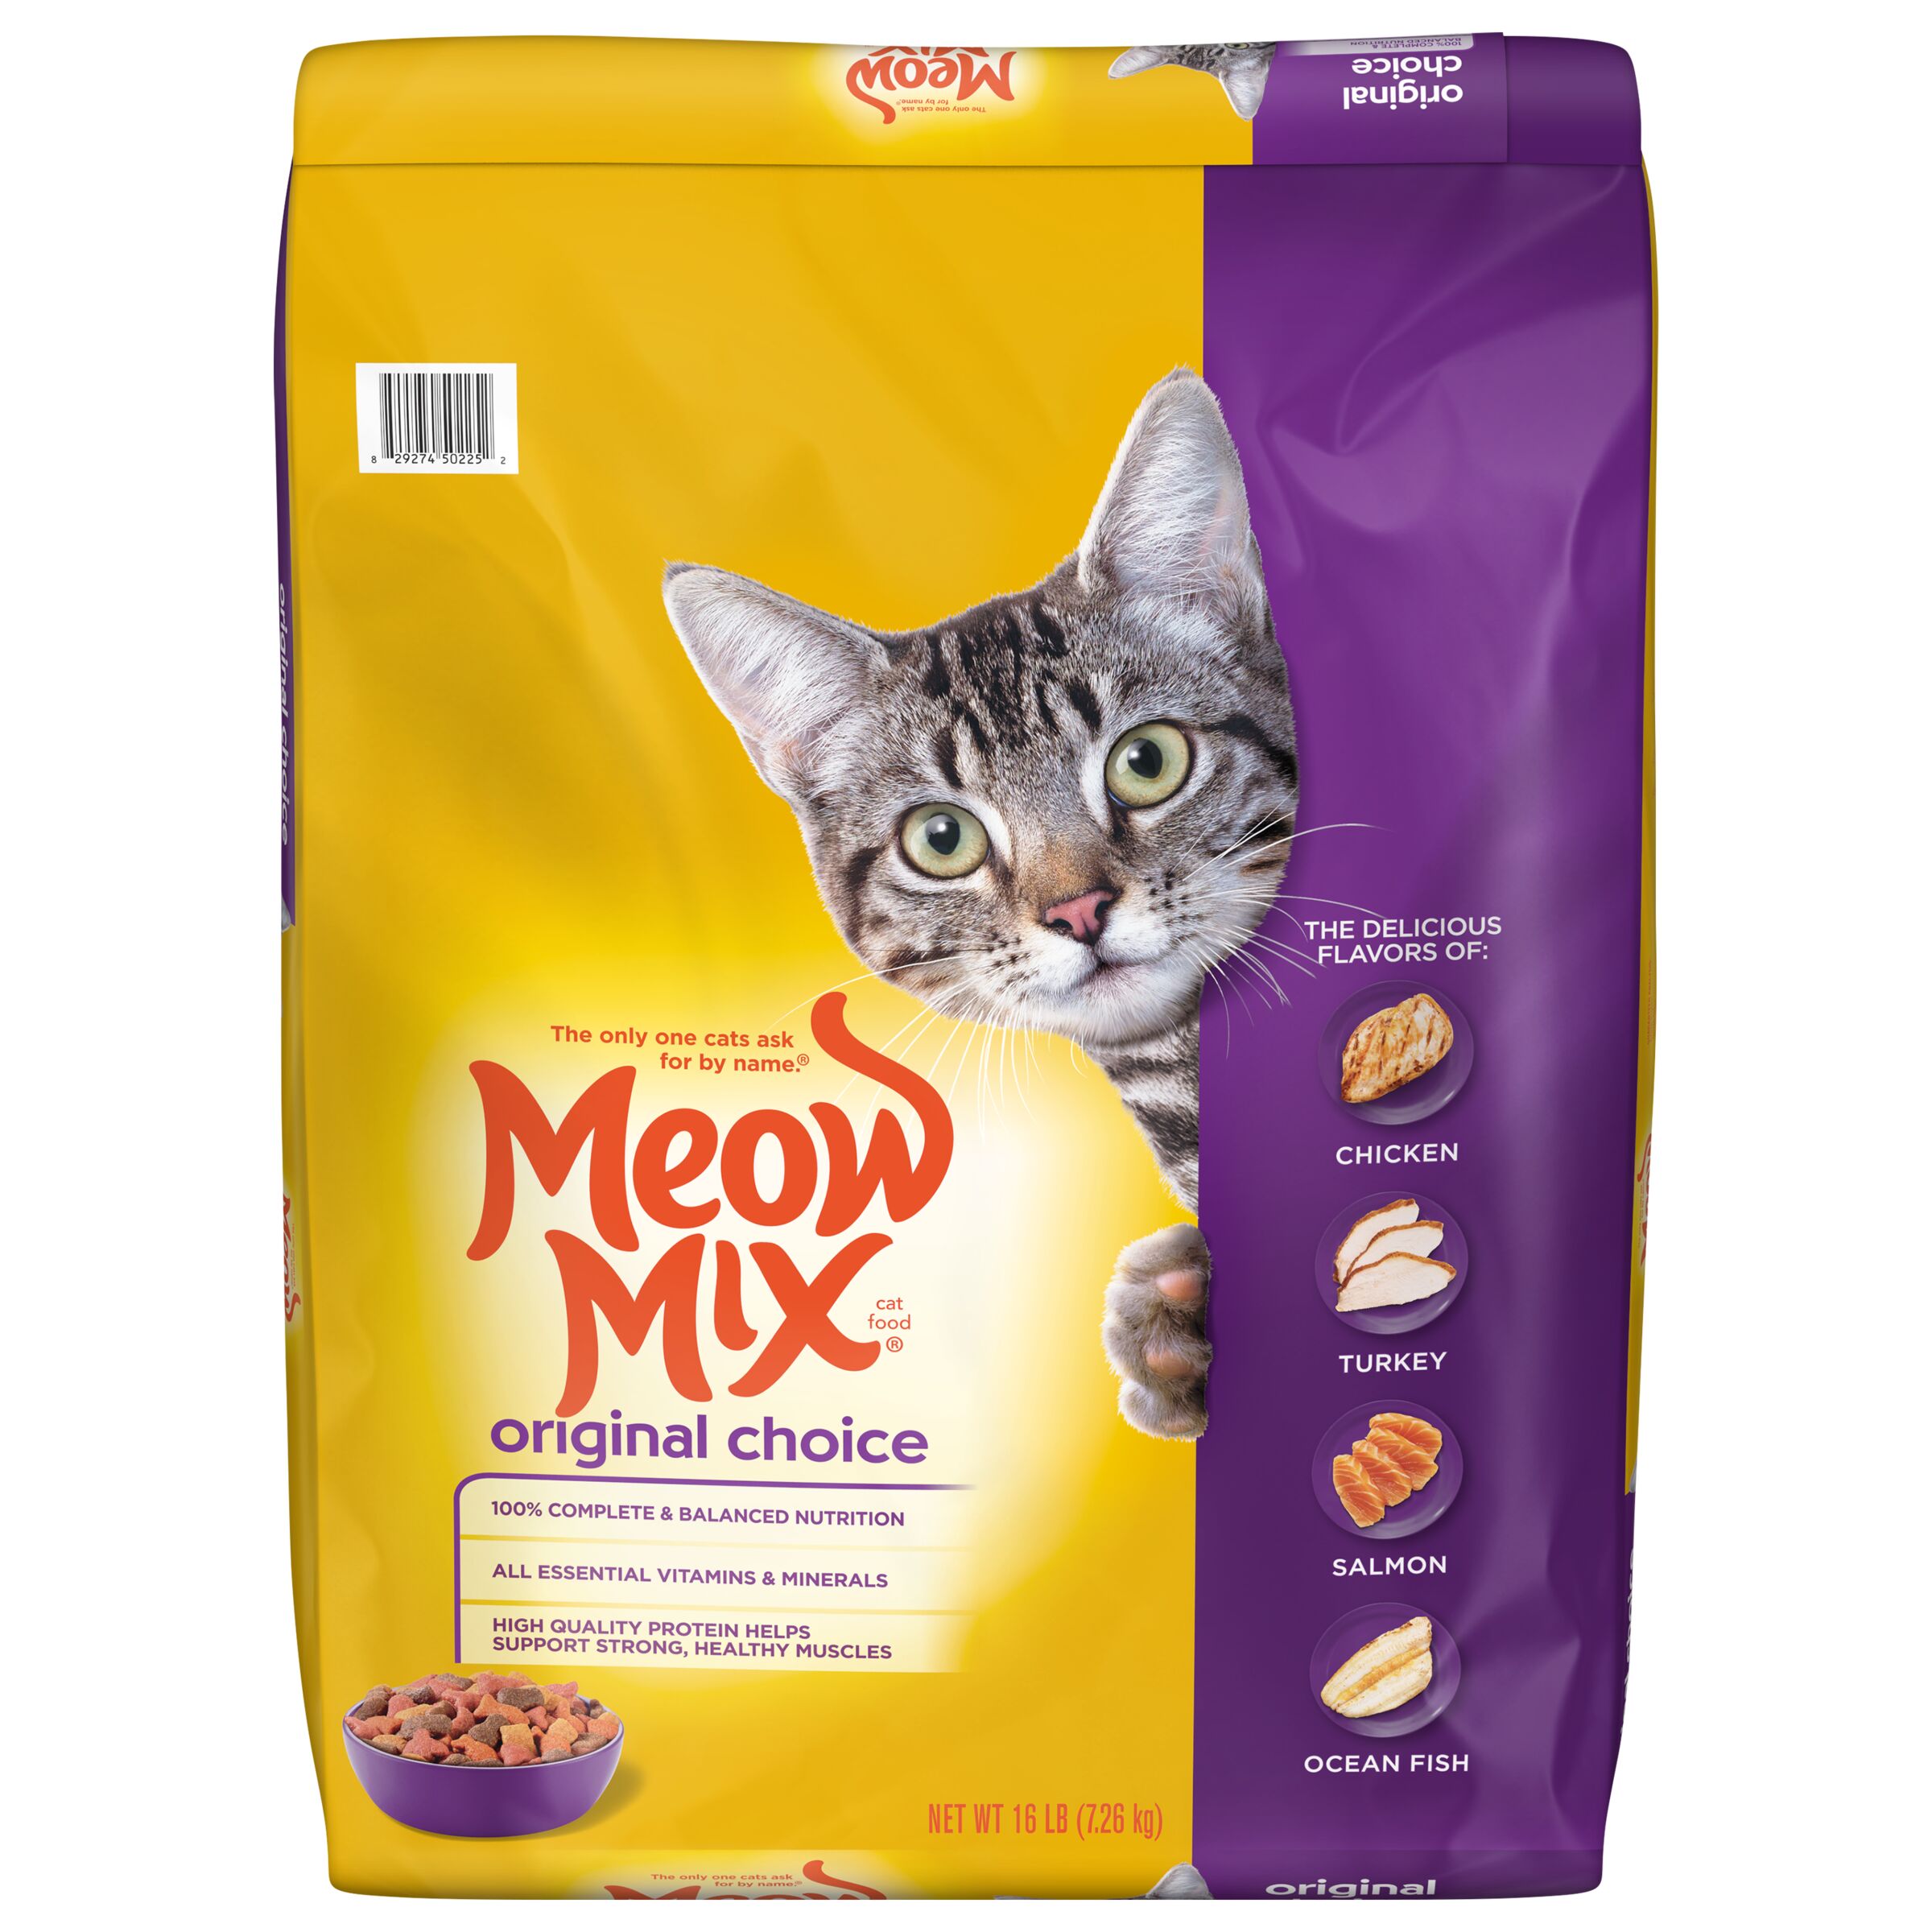 Meow Mix Original Choice Dry Cat Food, 16 Pounds - image 1 of 3